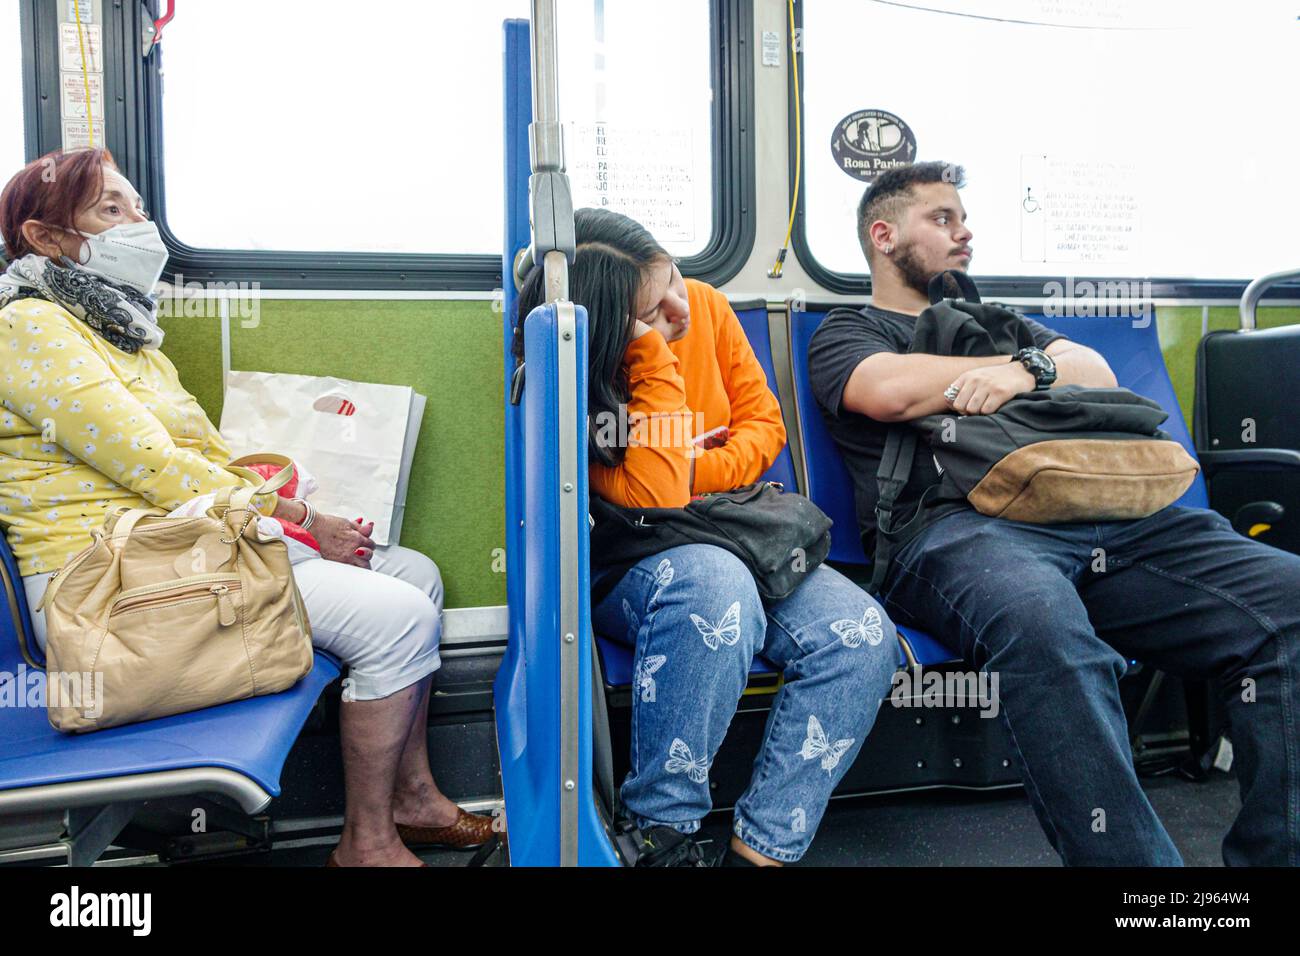 Miami Beach Florida, Miami-Dade Metrobus transporte público dentro del autobús interior, adolescente hispana durmiendo siestas pasajeros Foto de stock